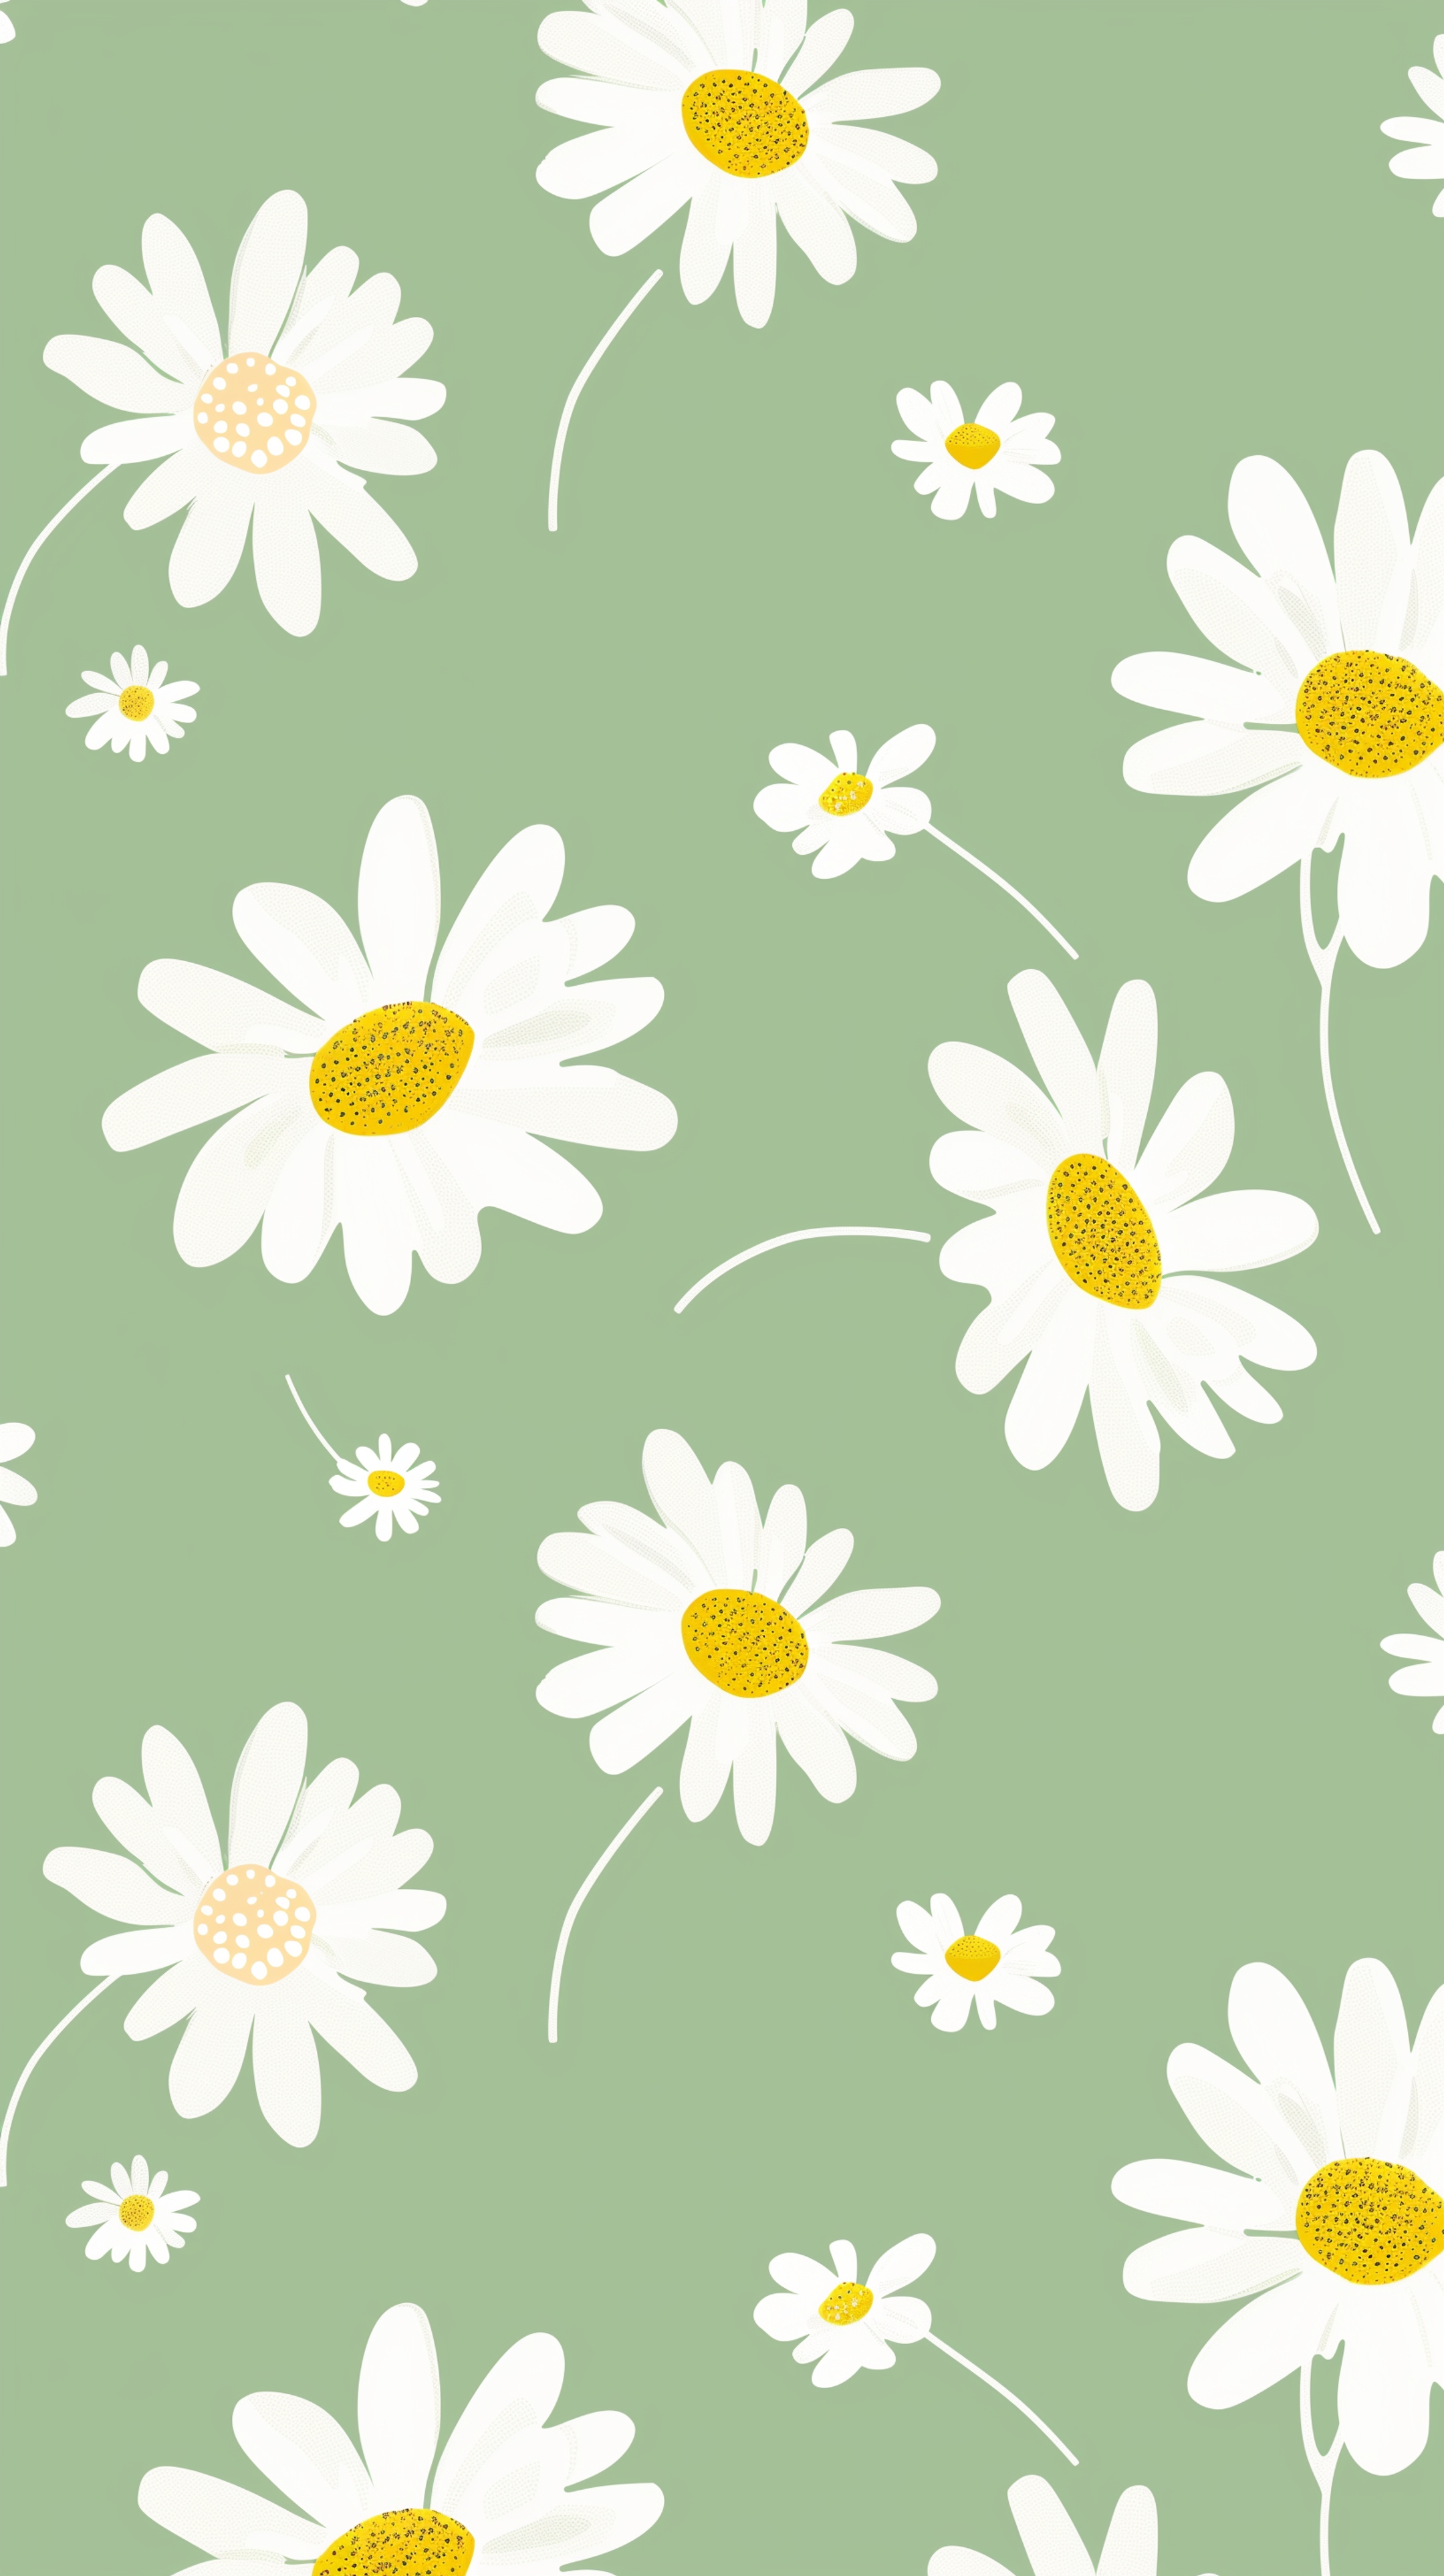 Cheerful Daisy Pattern for Kids Fond d'écran[cc2a0d8b223a410ca032]